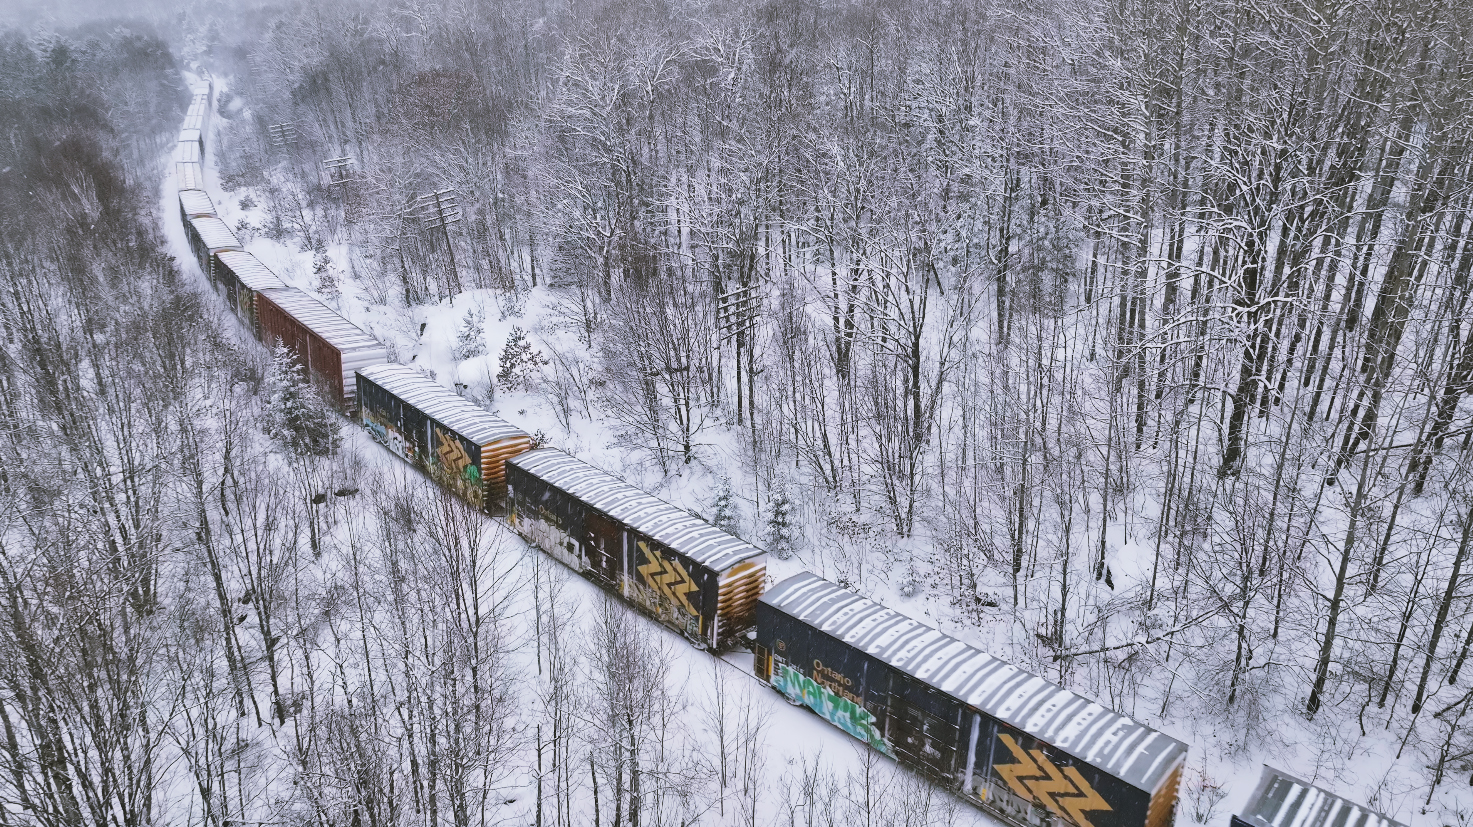 Ontario Northland train in winter